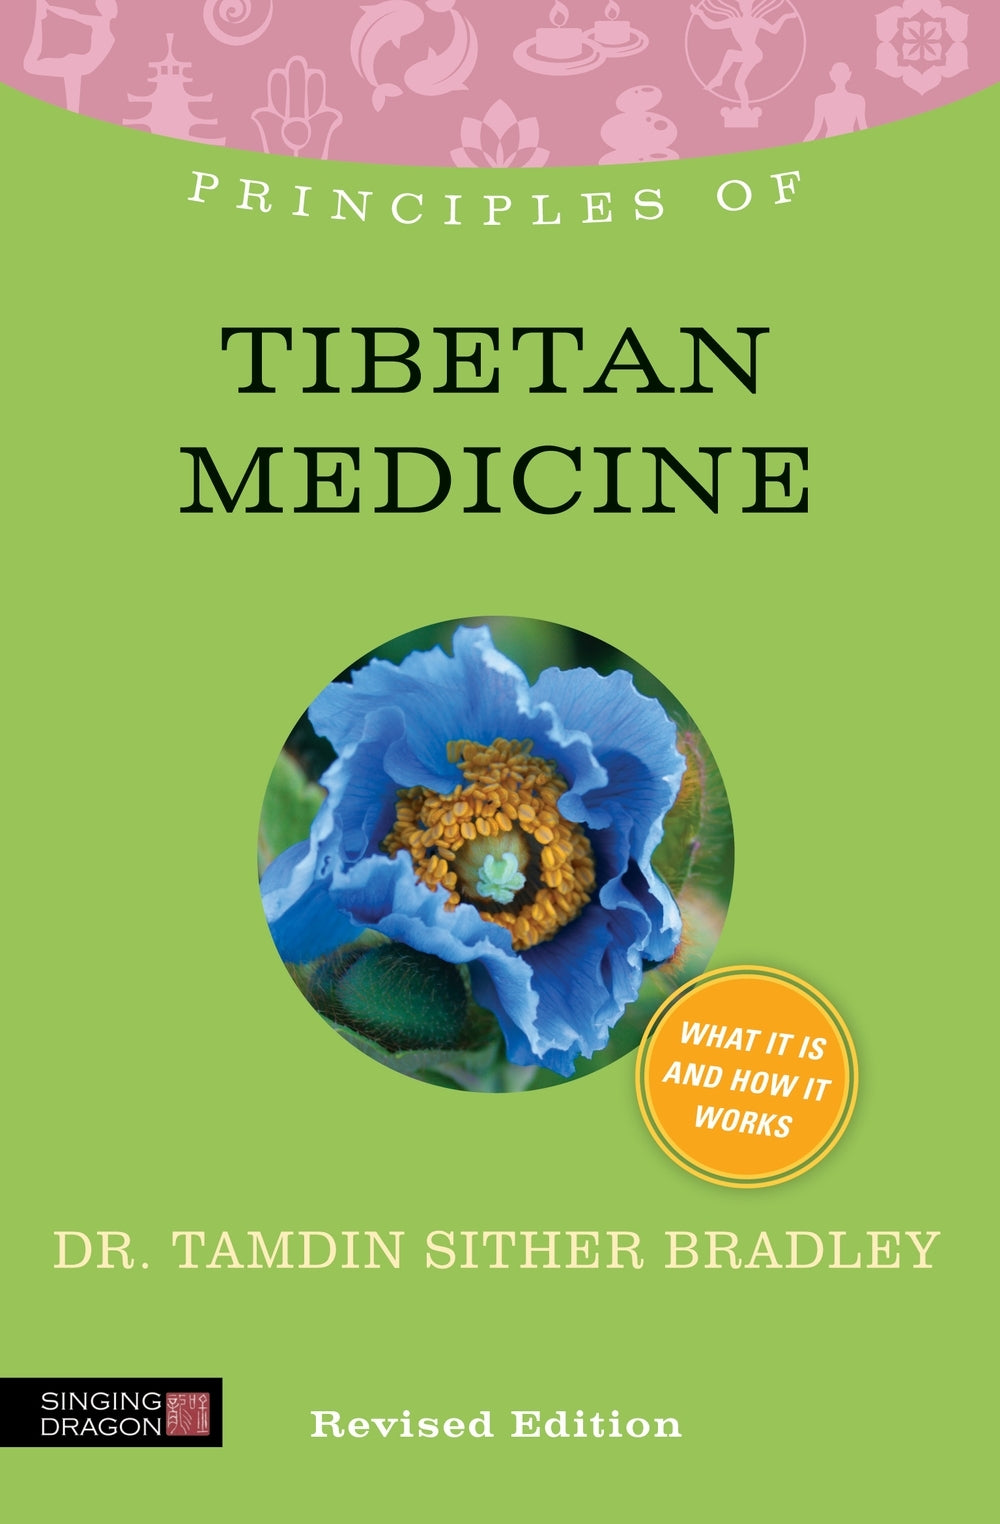 Principles of Tibetan Medicine by Tamdin Sither Bradley